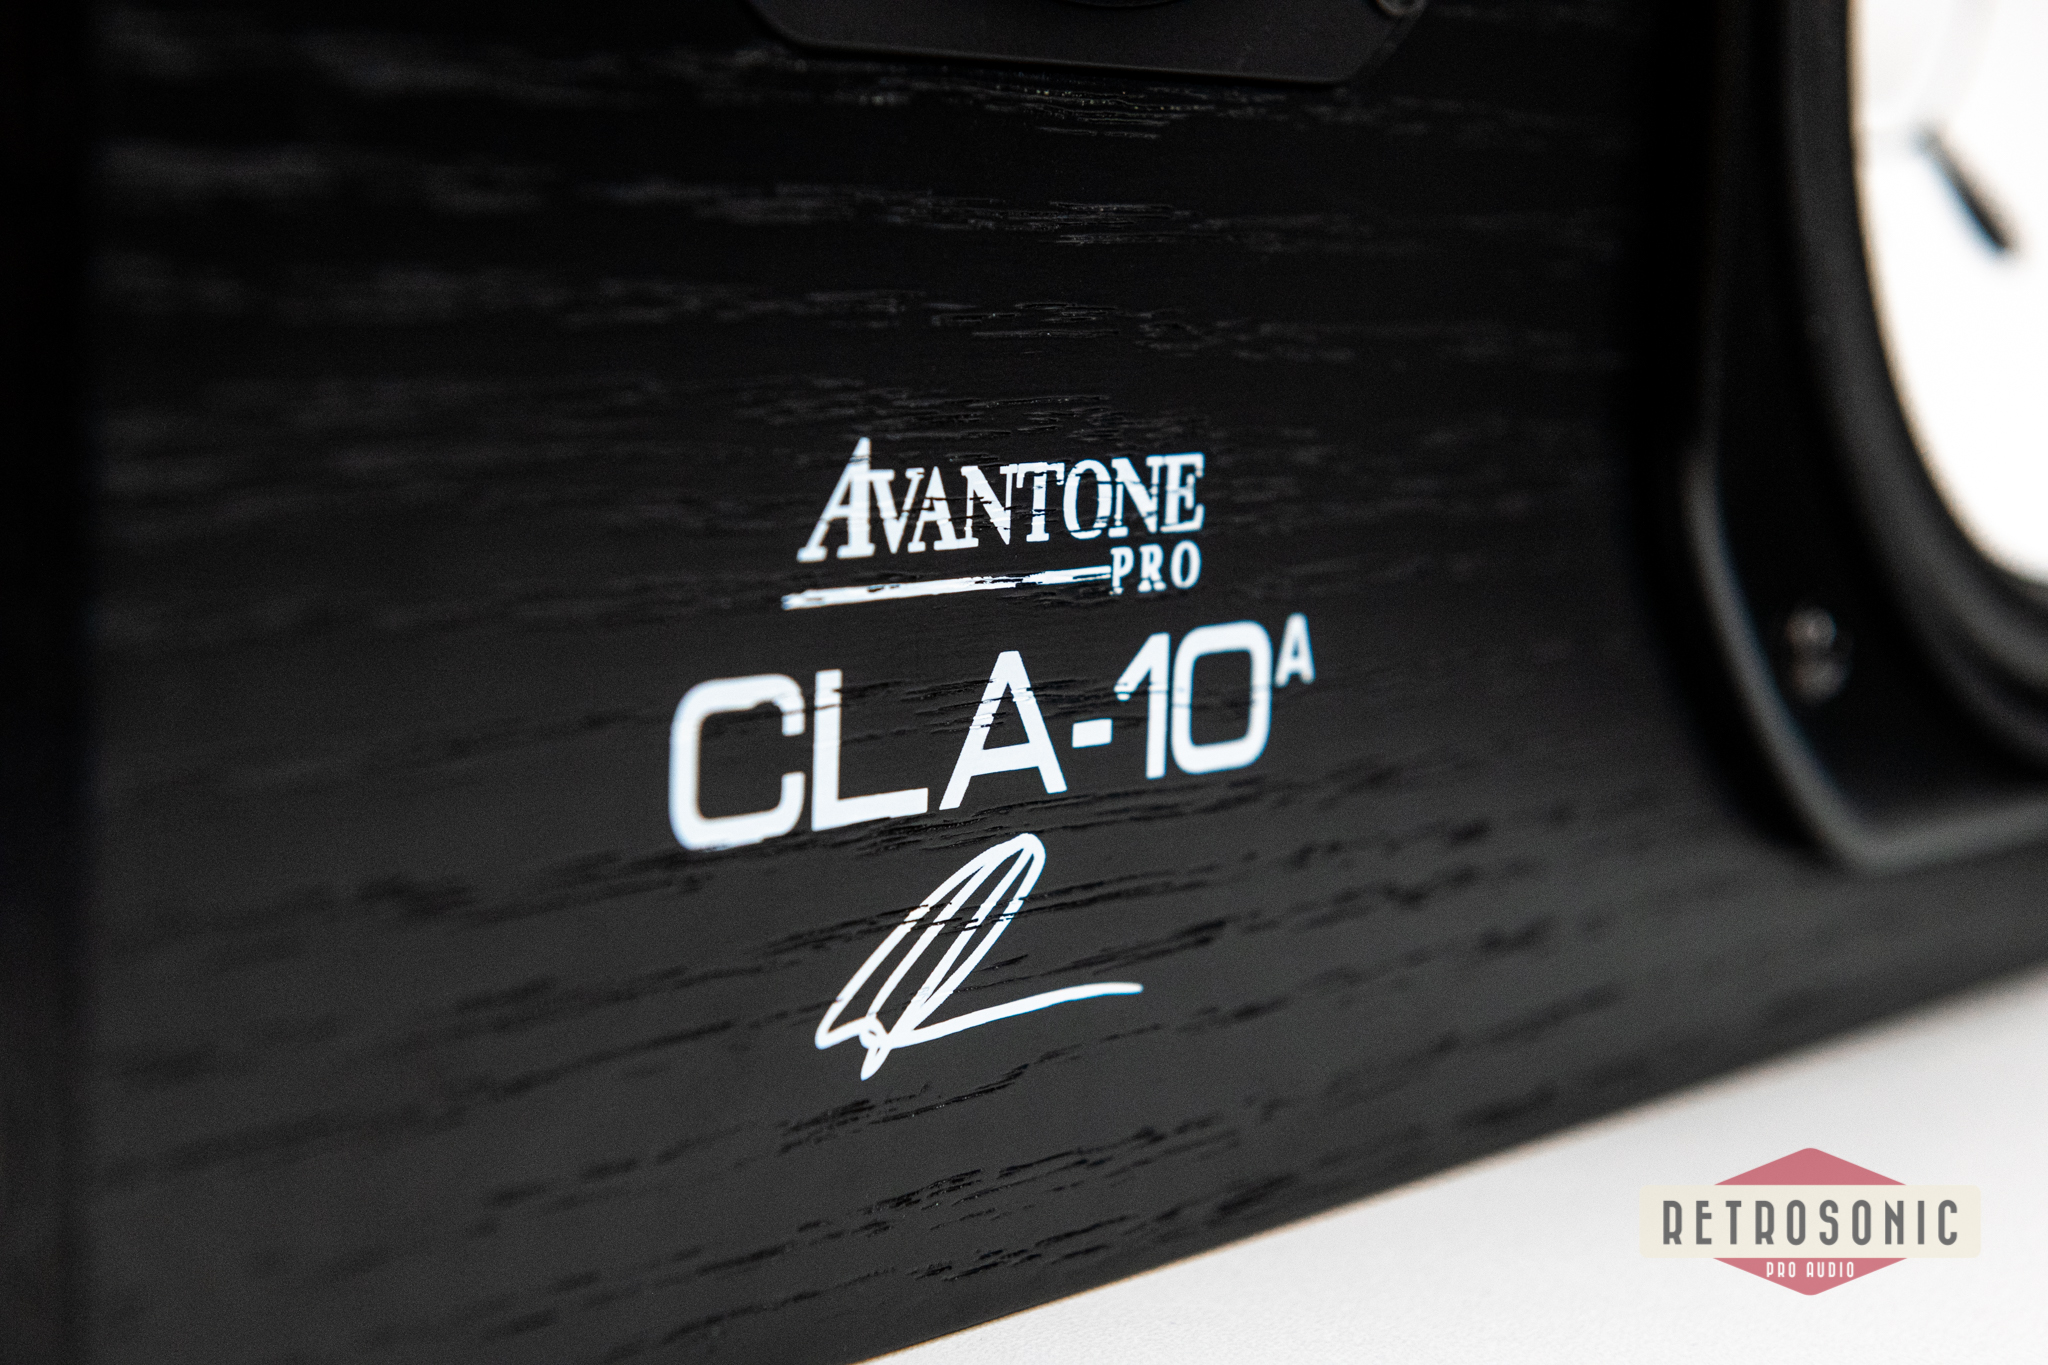 Avantone Pro CLA-10A pair